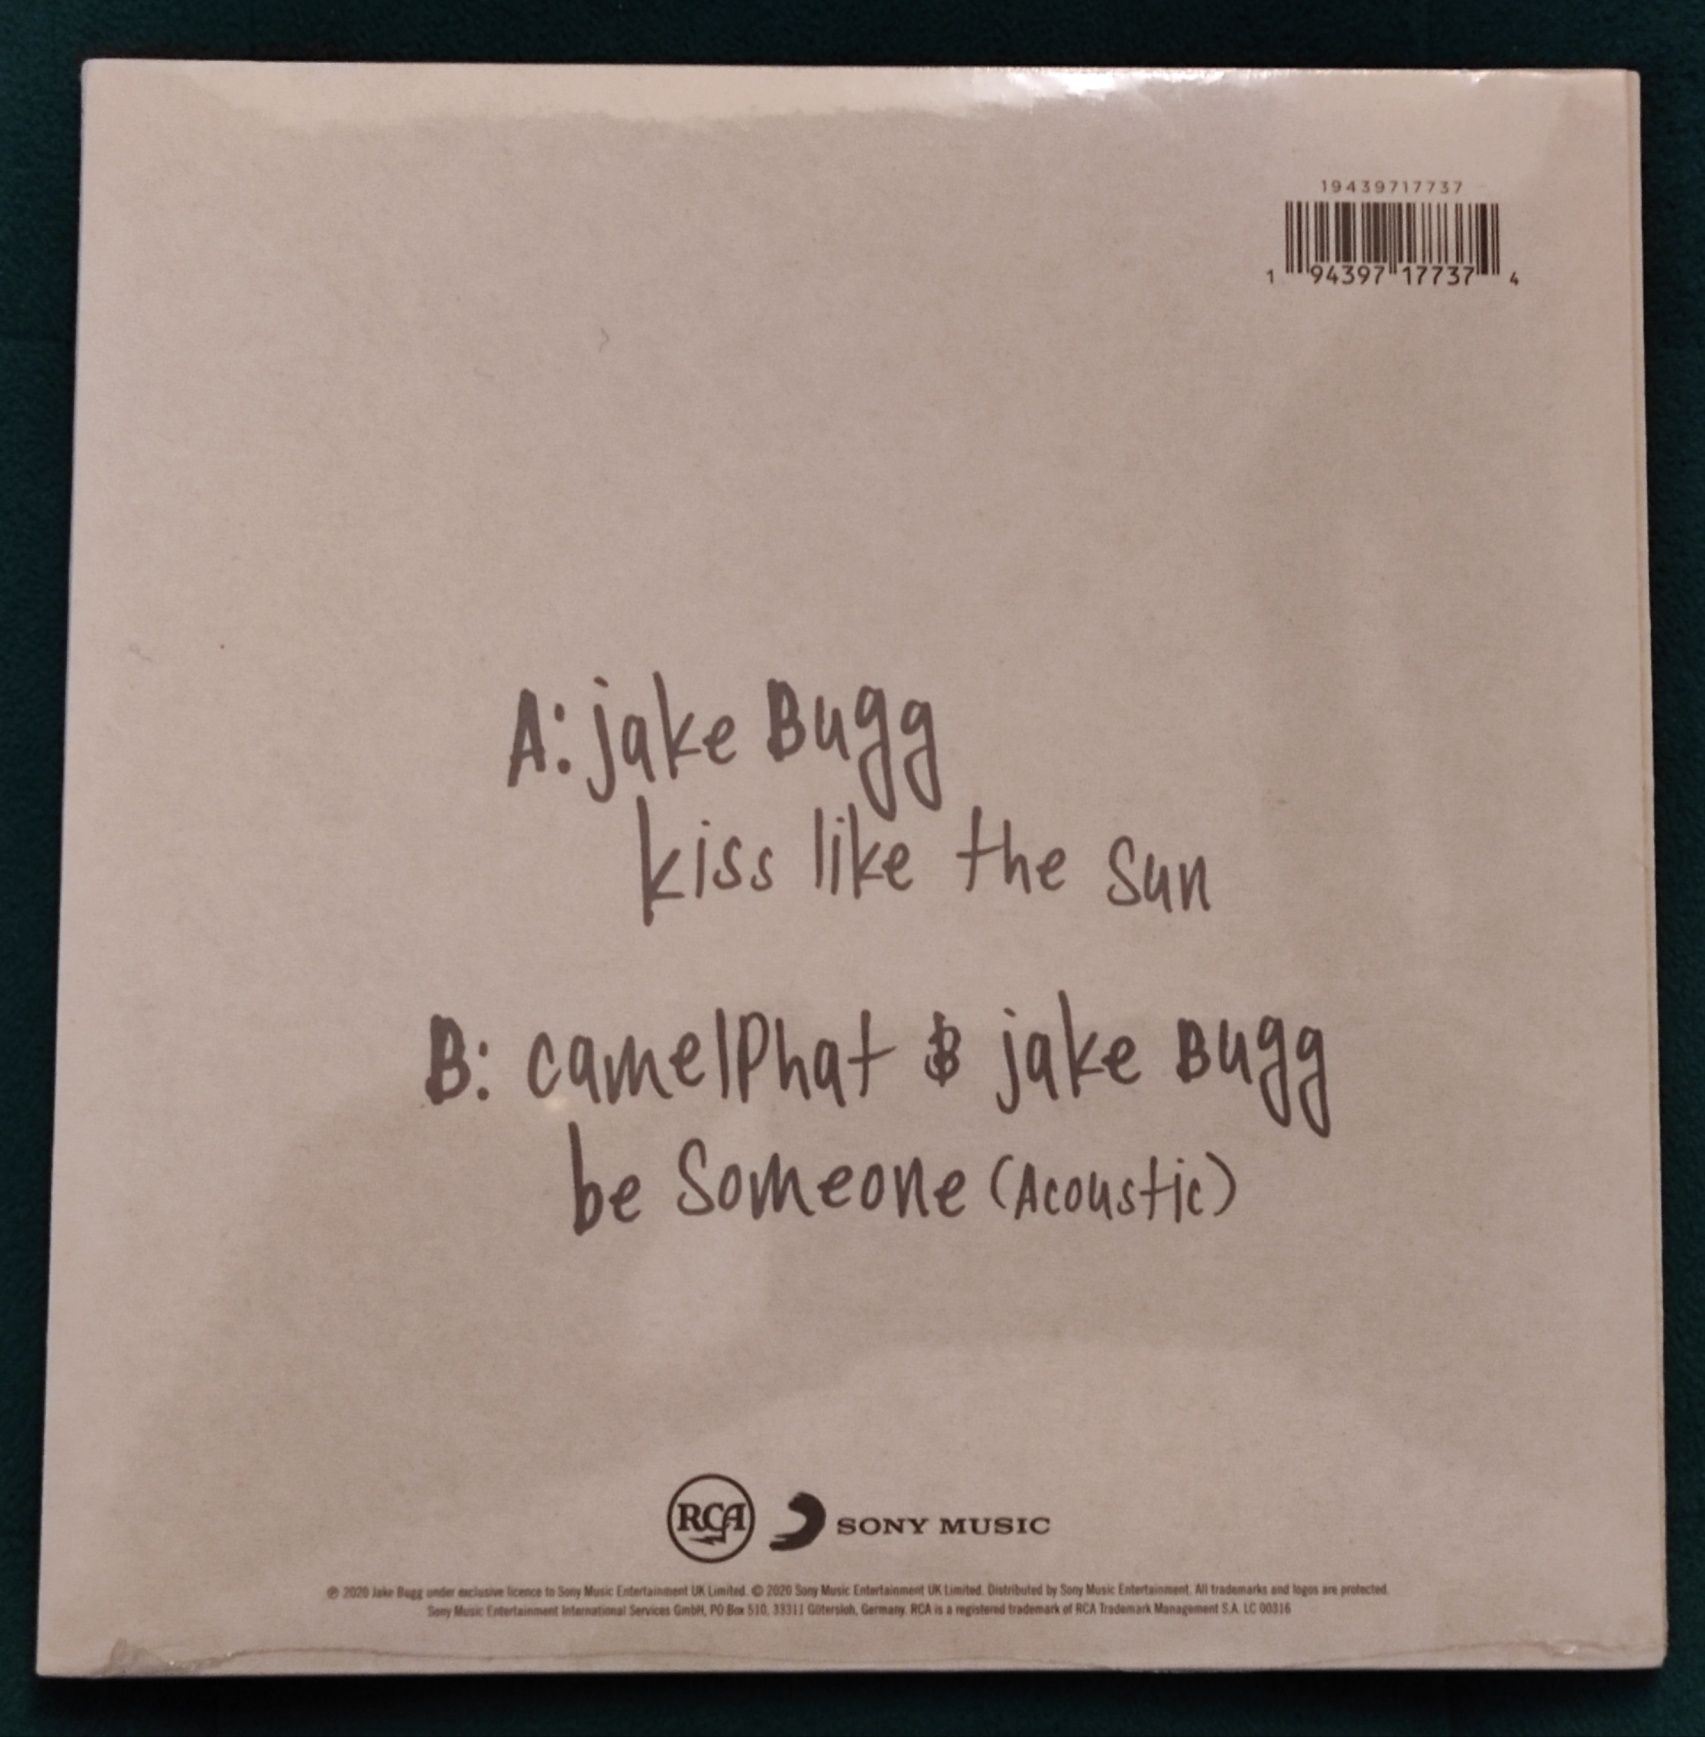 Jake Bugg - Kiss Like The Sun 7" single vinil